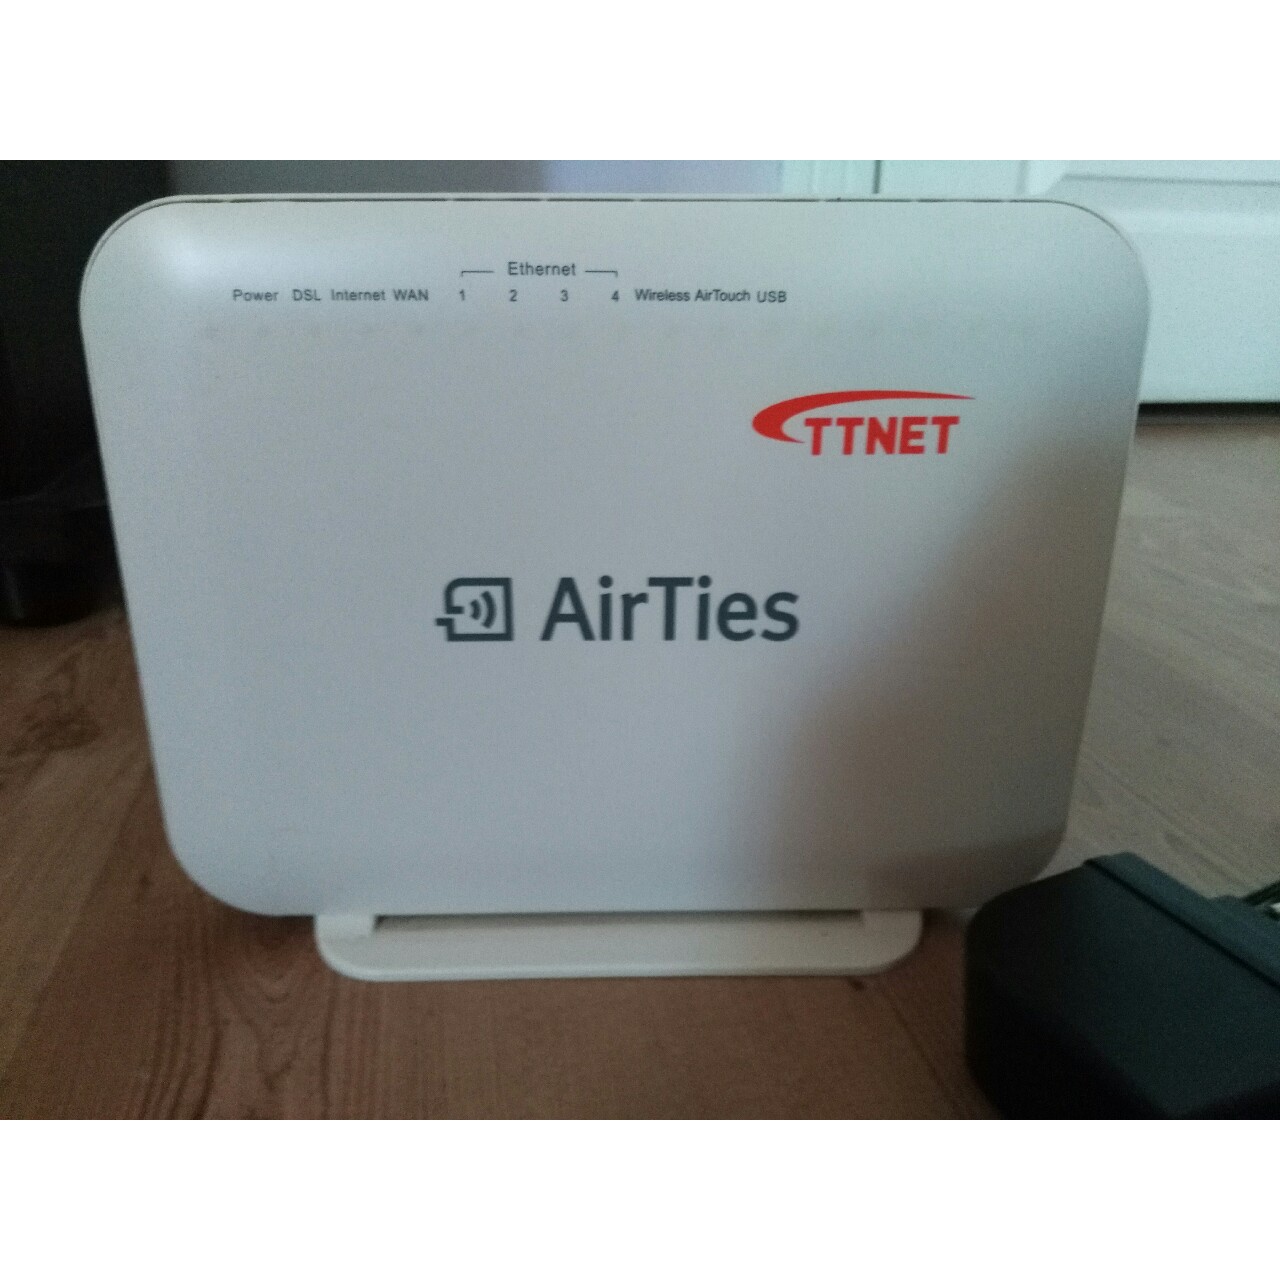 Airties 5650 vdsl modem (ttnet versiyon) | DonanımHaber Forum